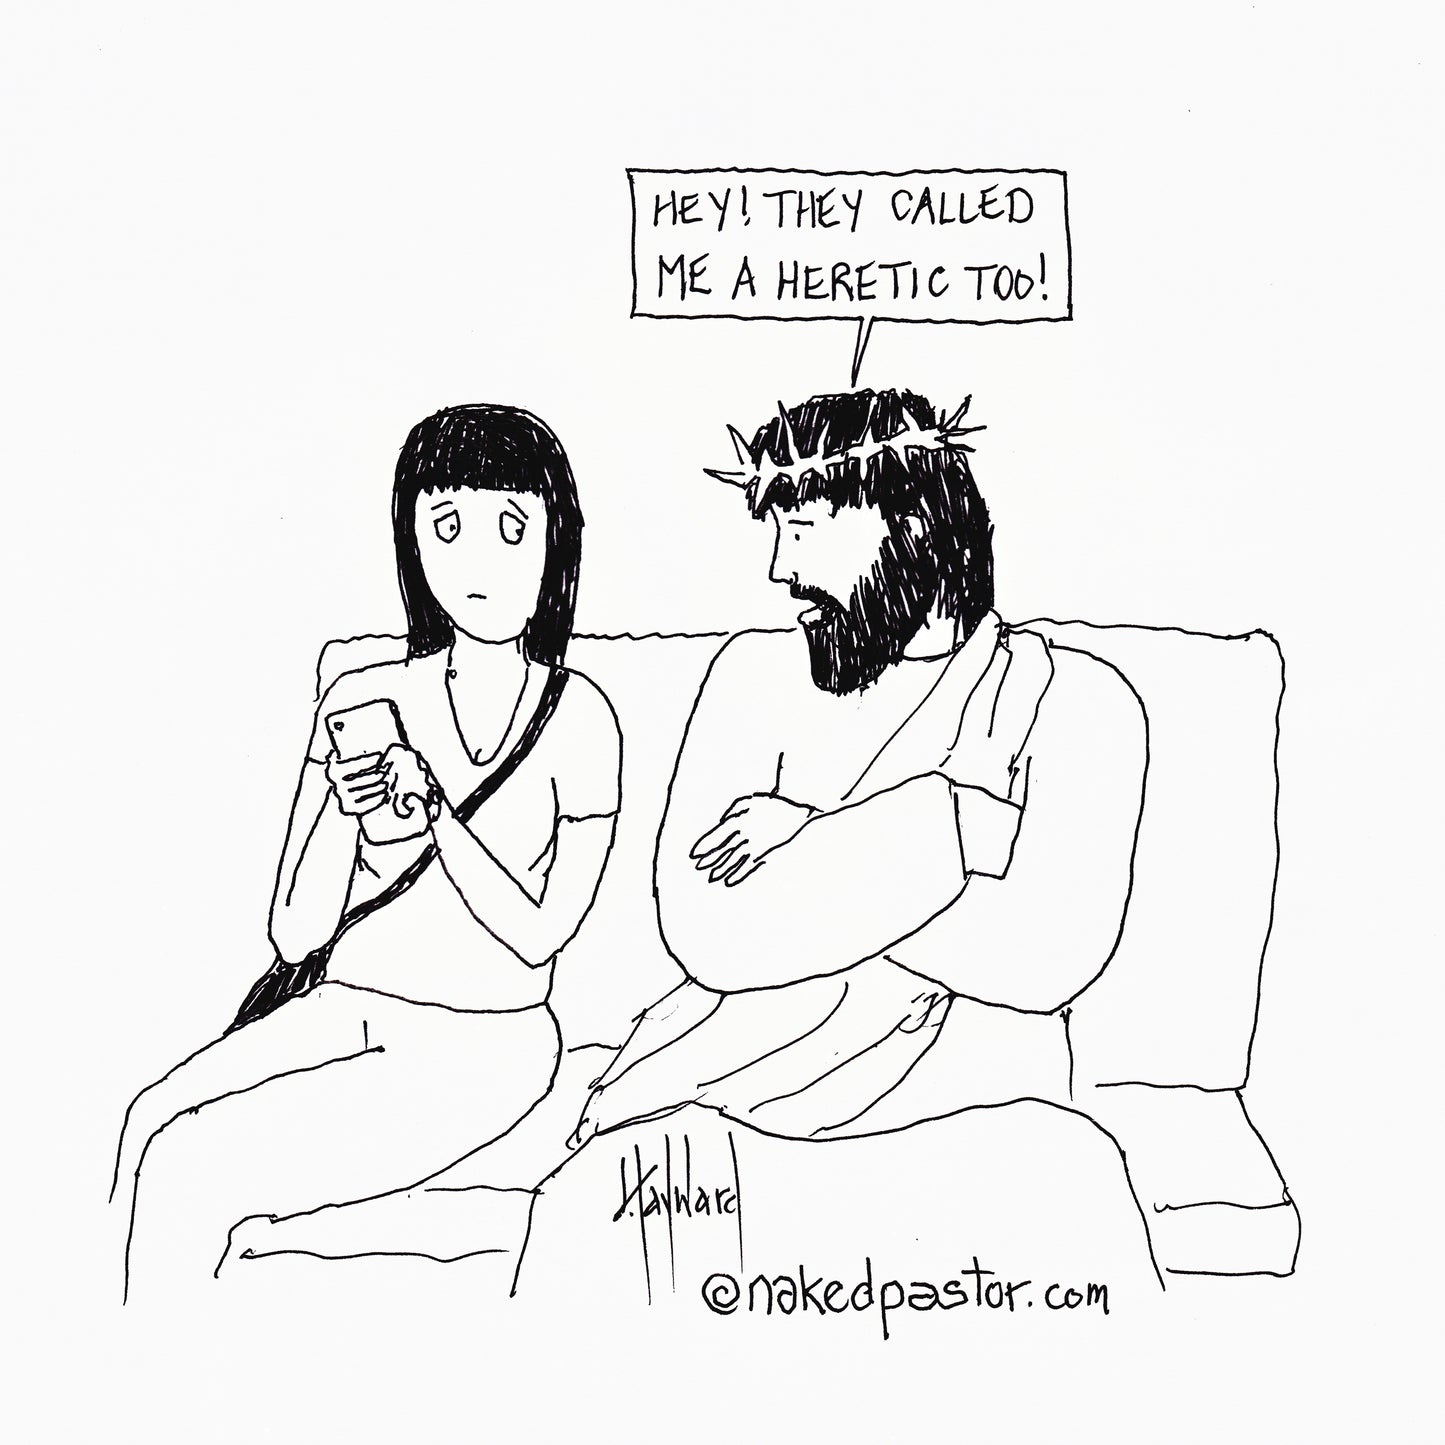 Are You a Heretic Too? Digital Cartoon